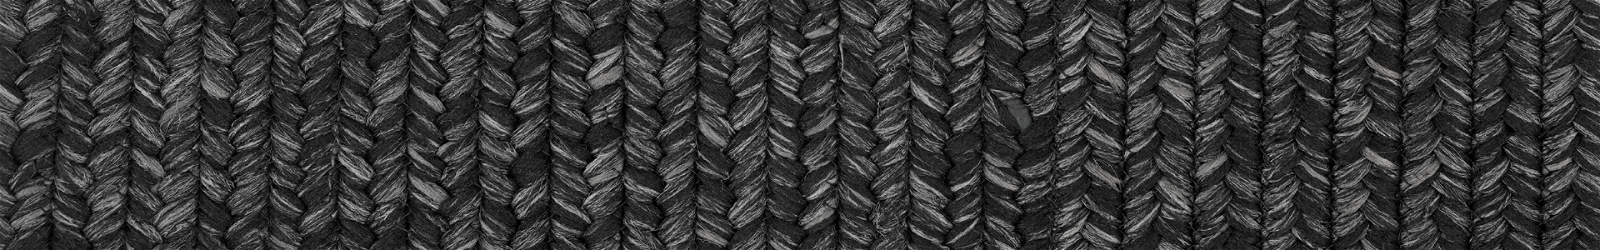 10 x 10 - Jute - Black Braided Rugs